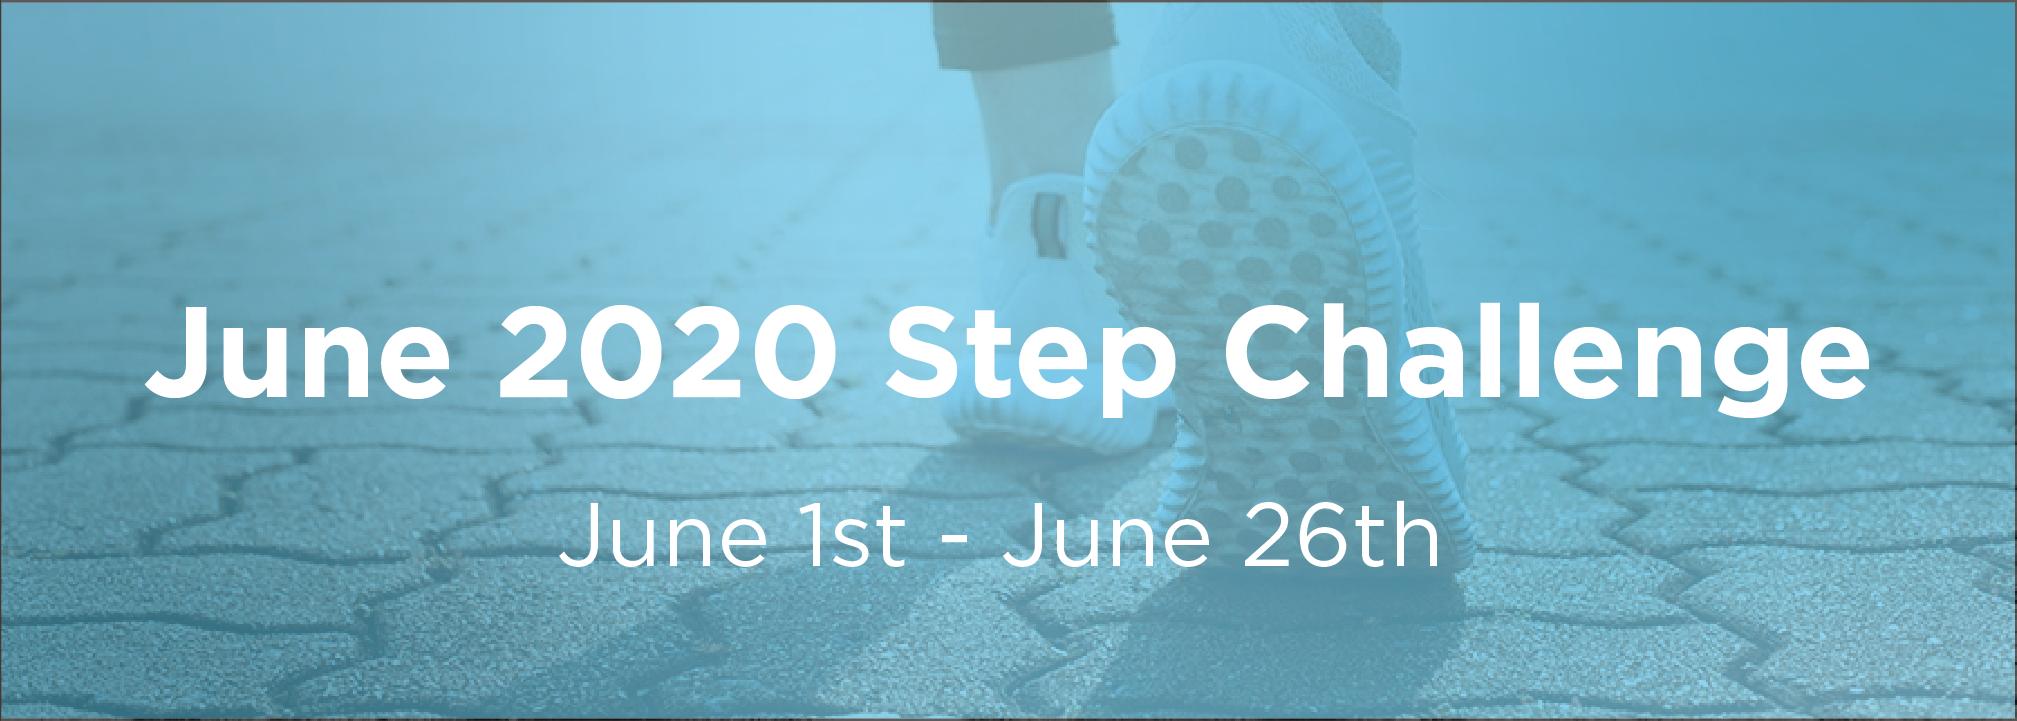 June 2020 Step Challenge